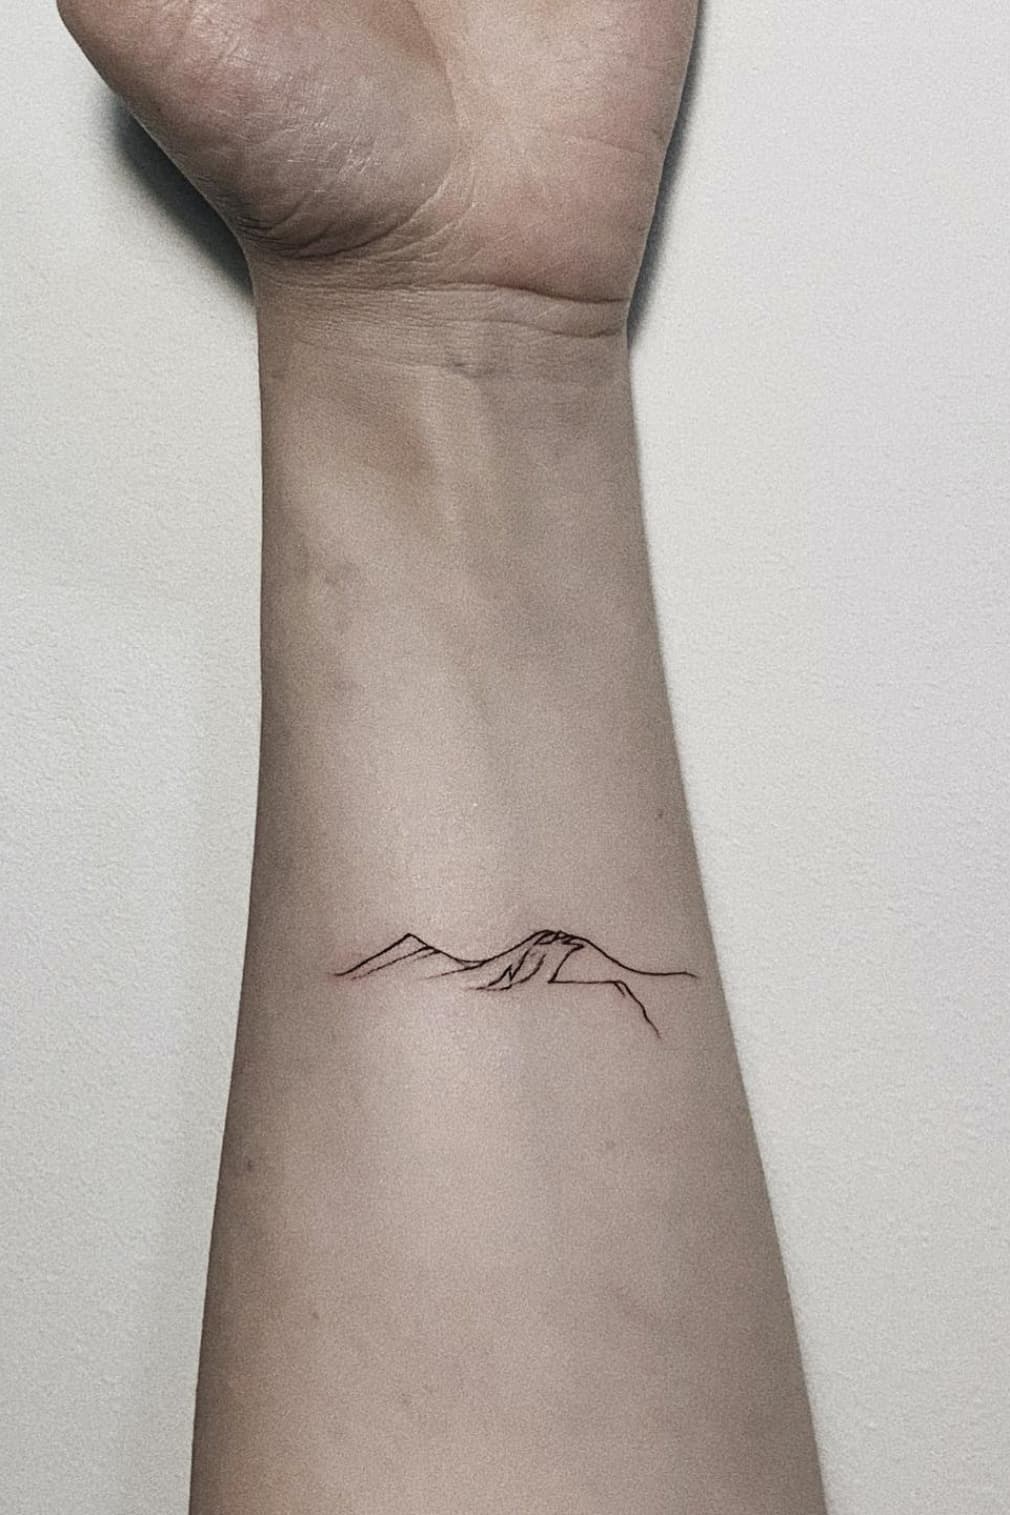 Mountain Silhouette Tattoo